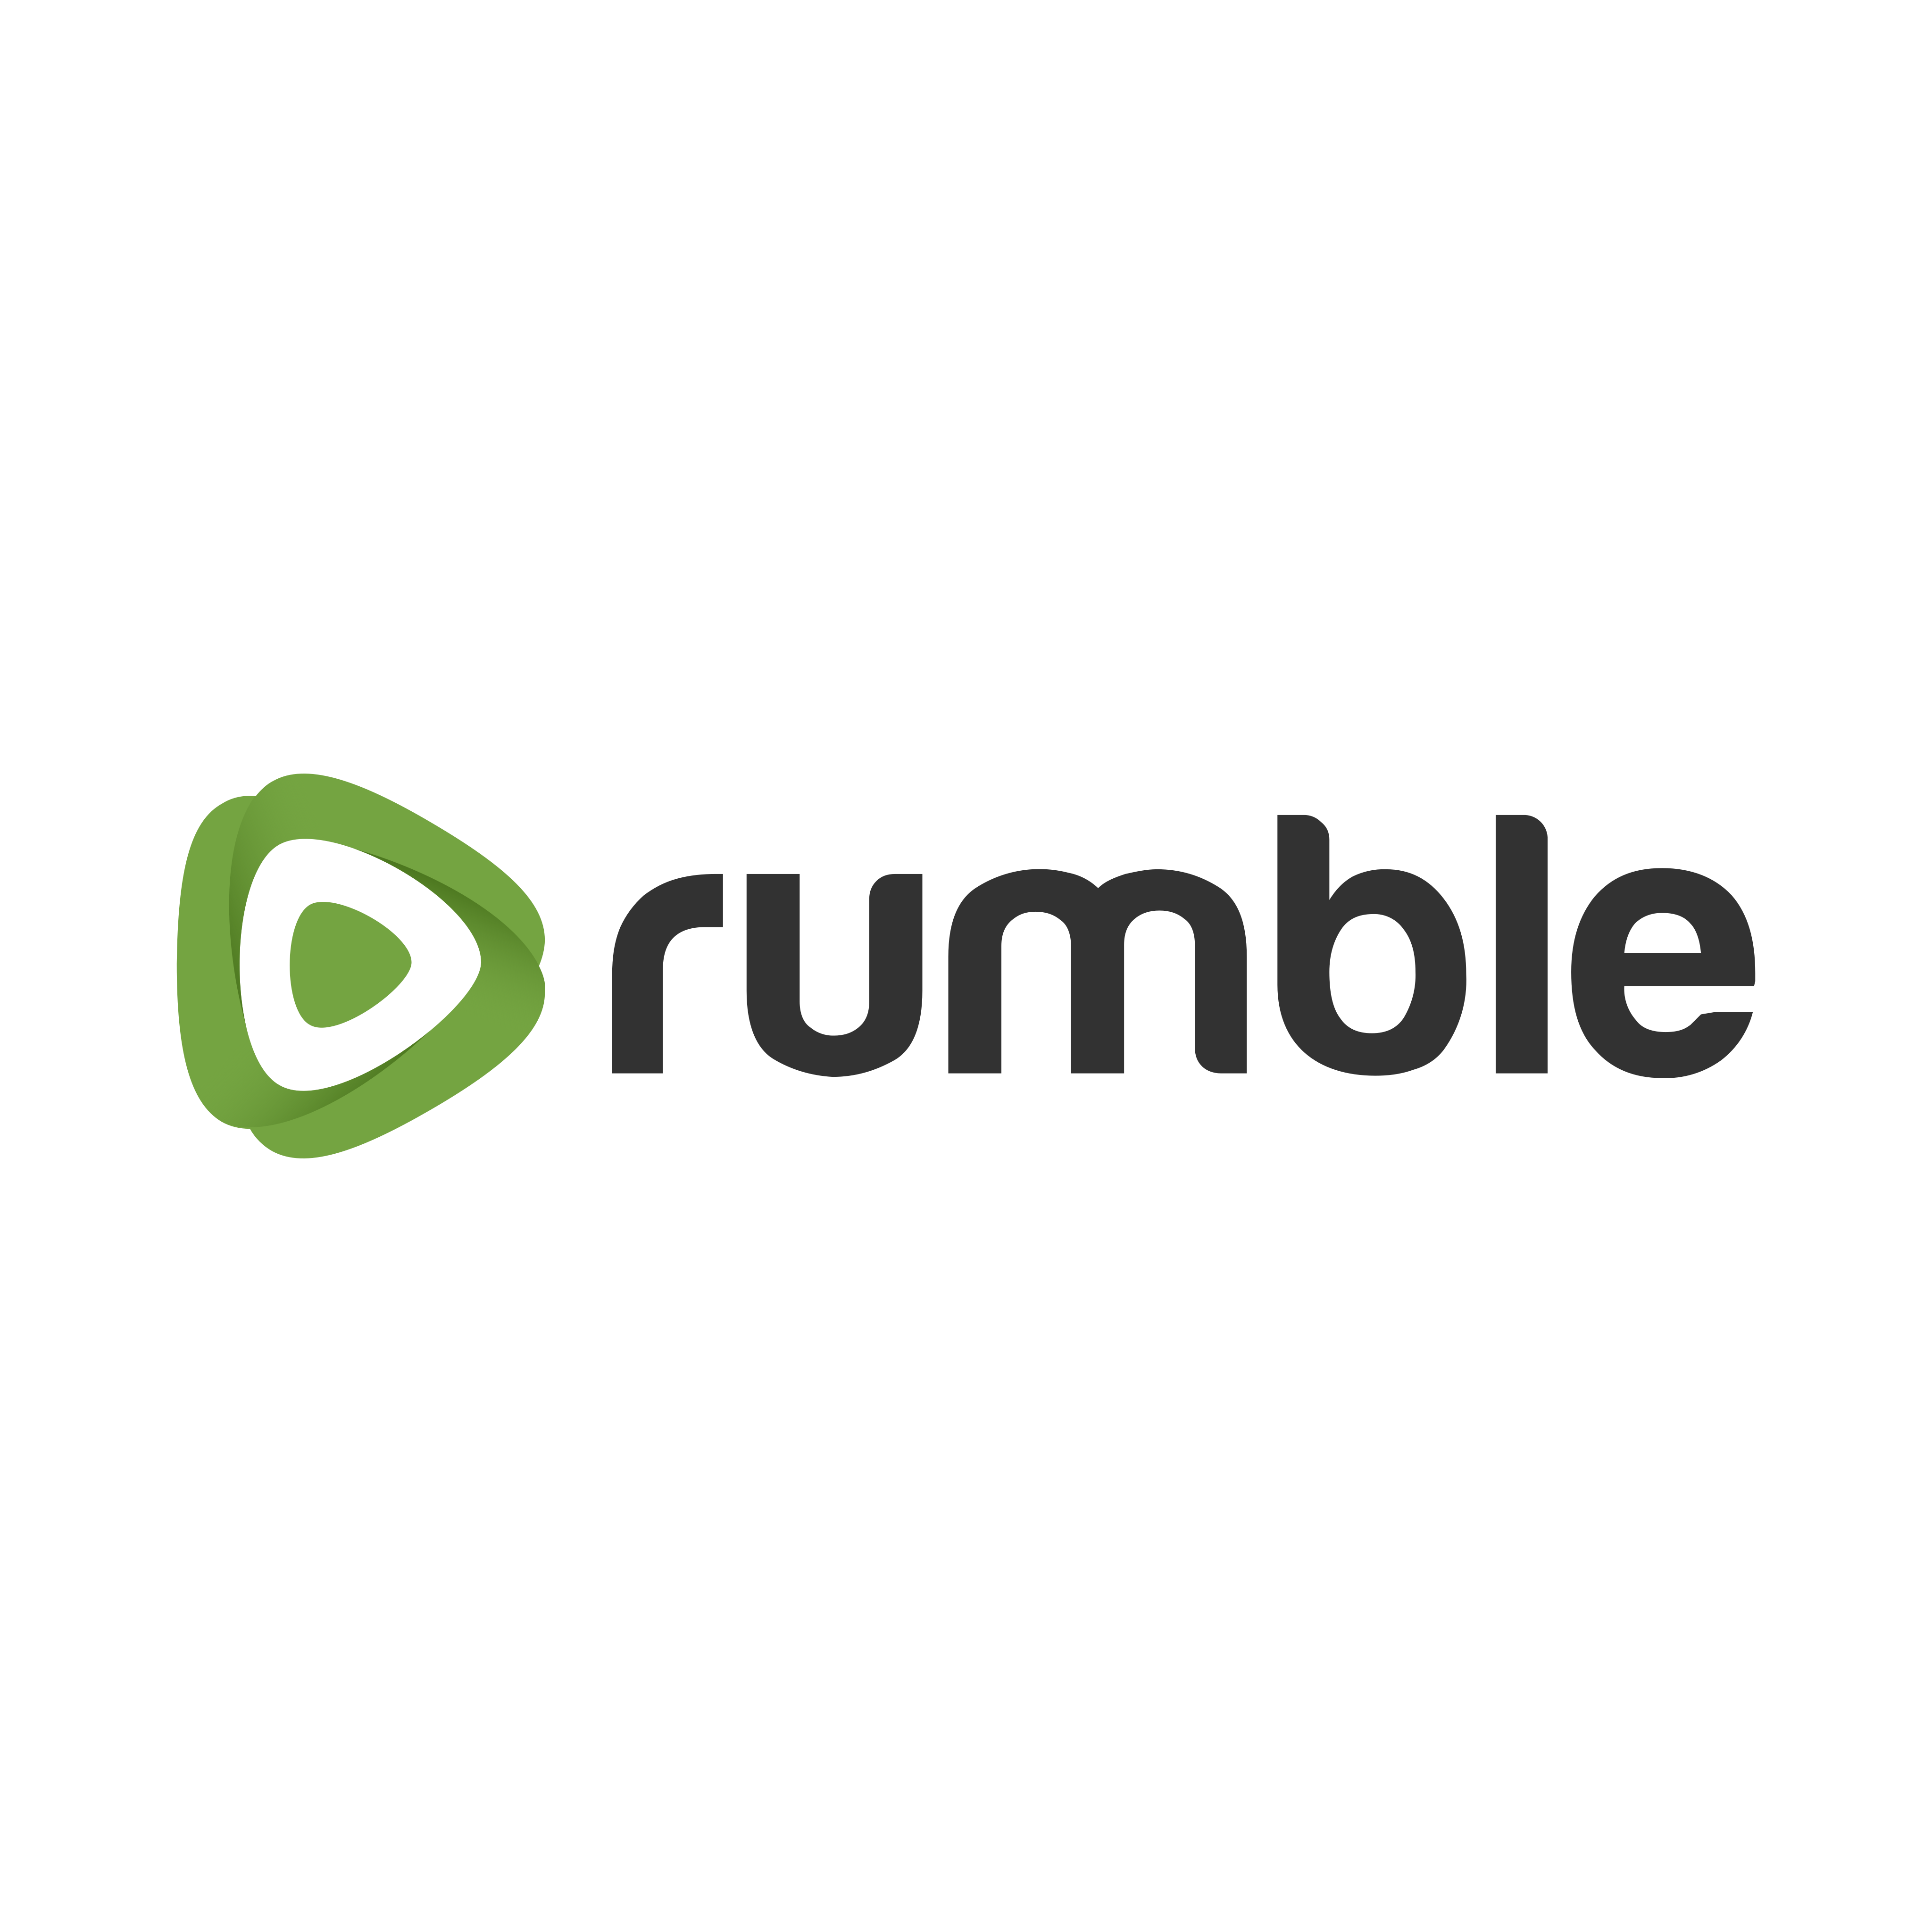 Rumble Logo PNG.